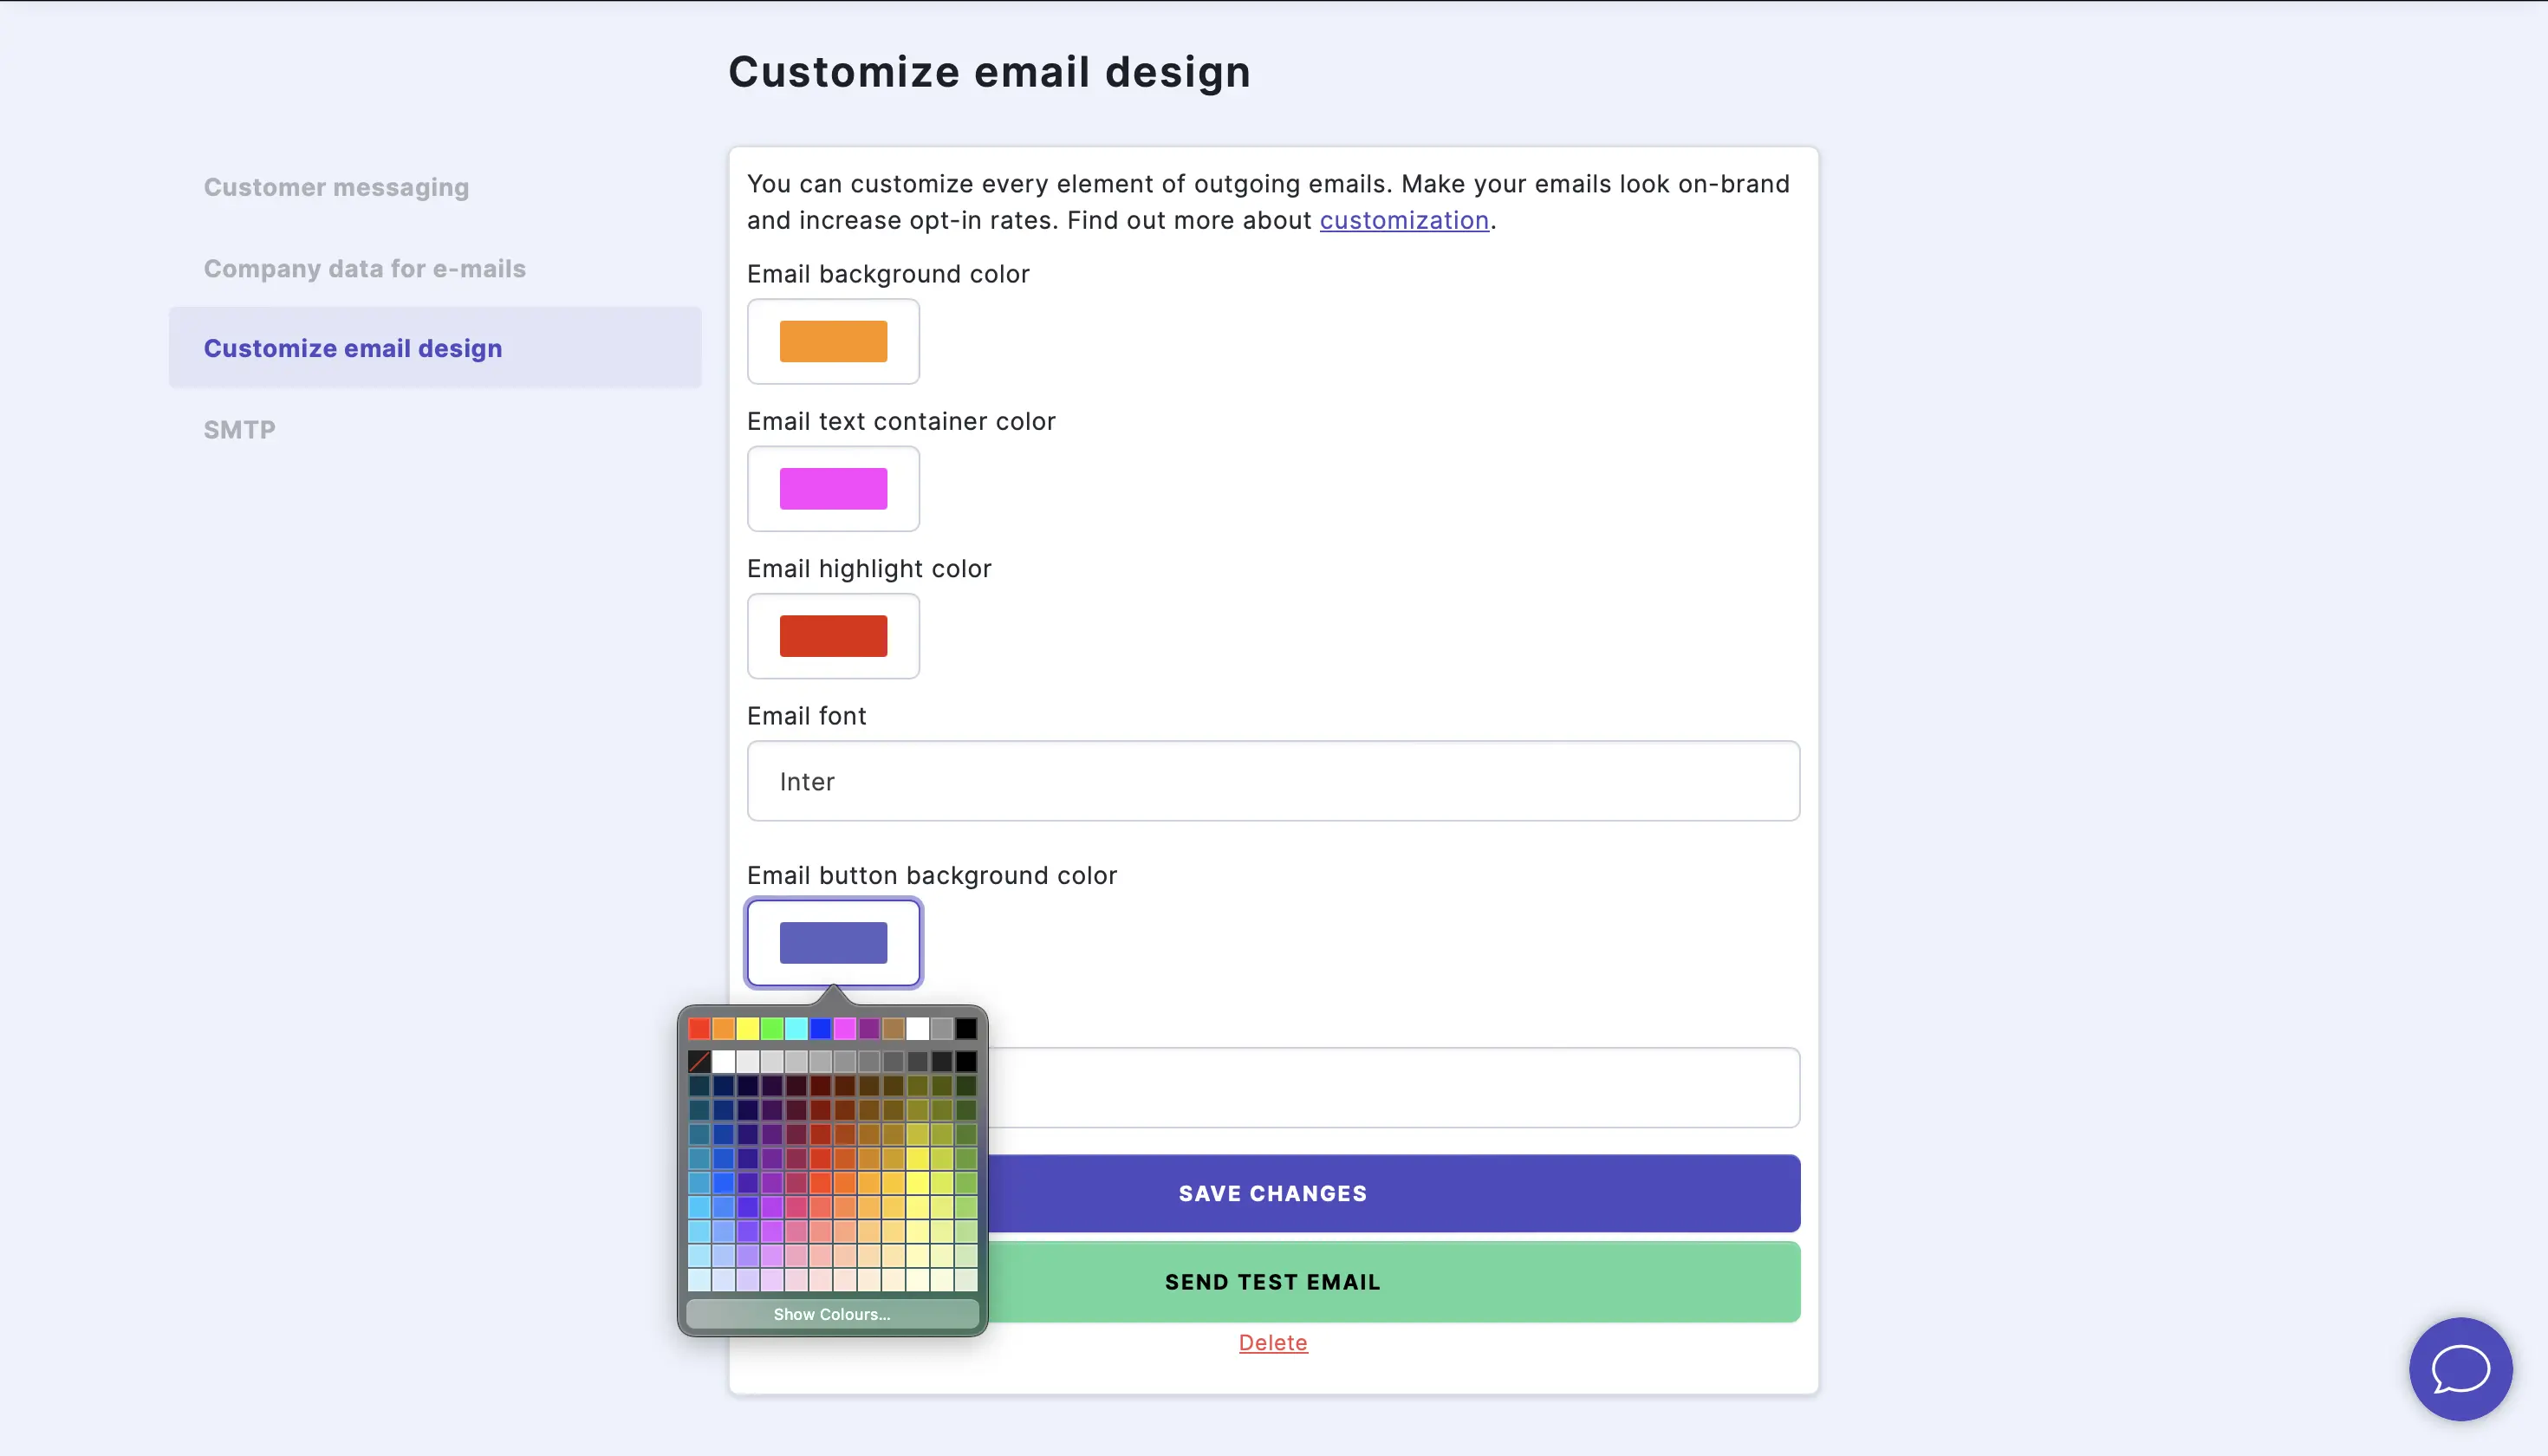 email button backrgound color